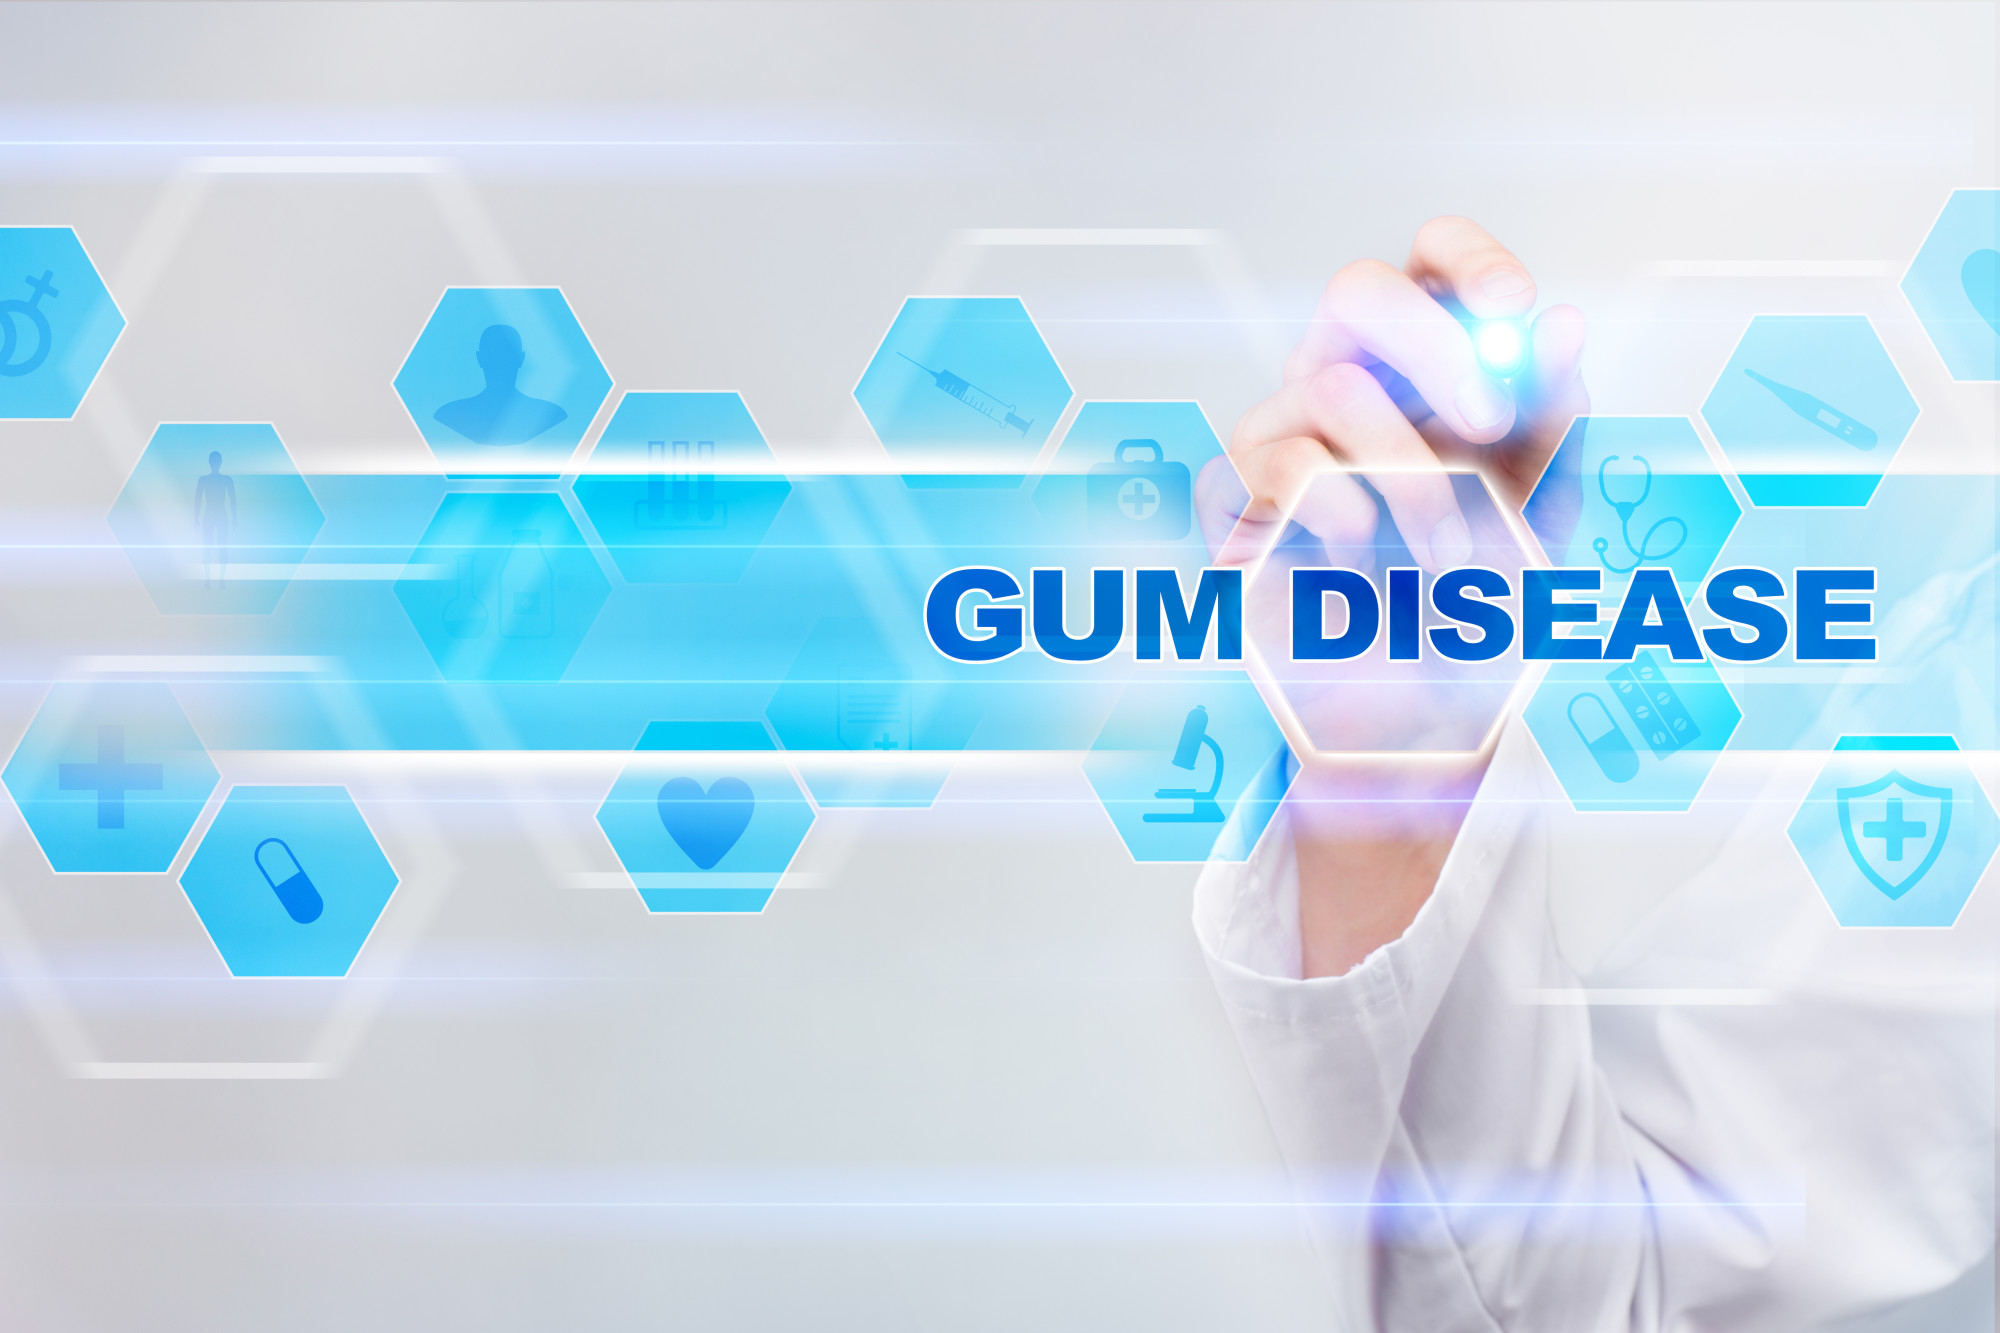 periodontist drawing gum disease on the virtual screen.